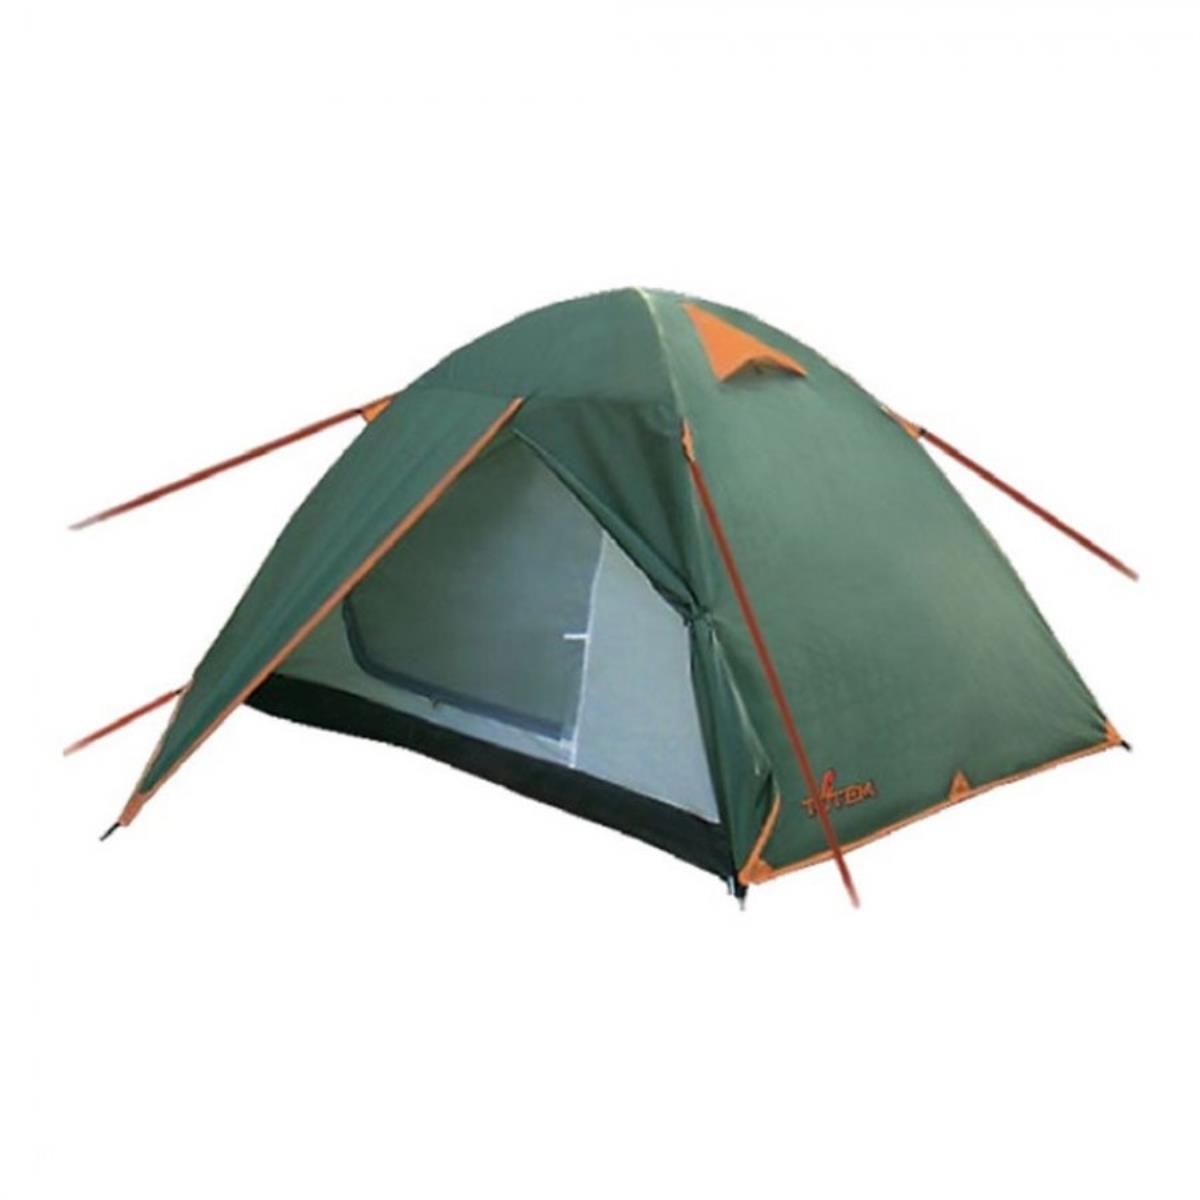 Треккинговая палатка Tepee 3 V2 (TTT-026) Totem палатка catawba 4 v2 зеленый ttt 024 totem